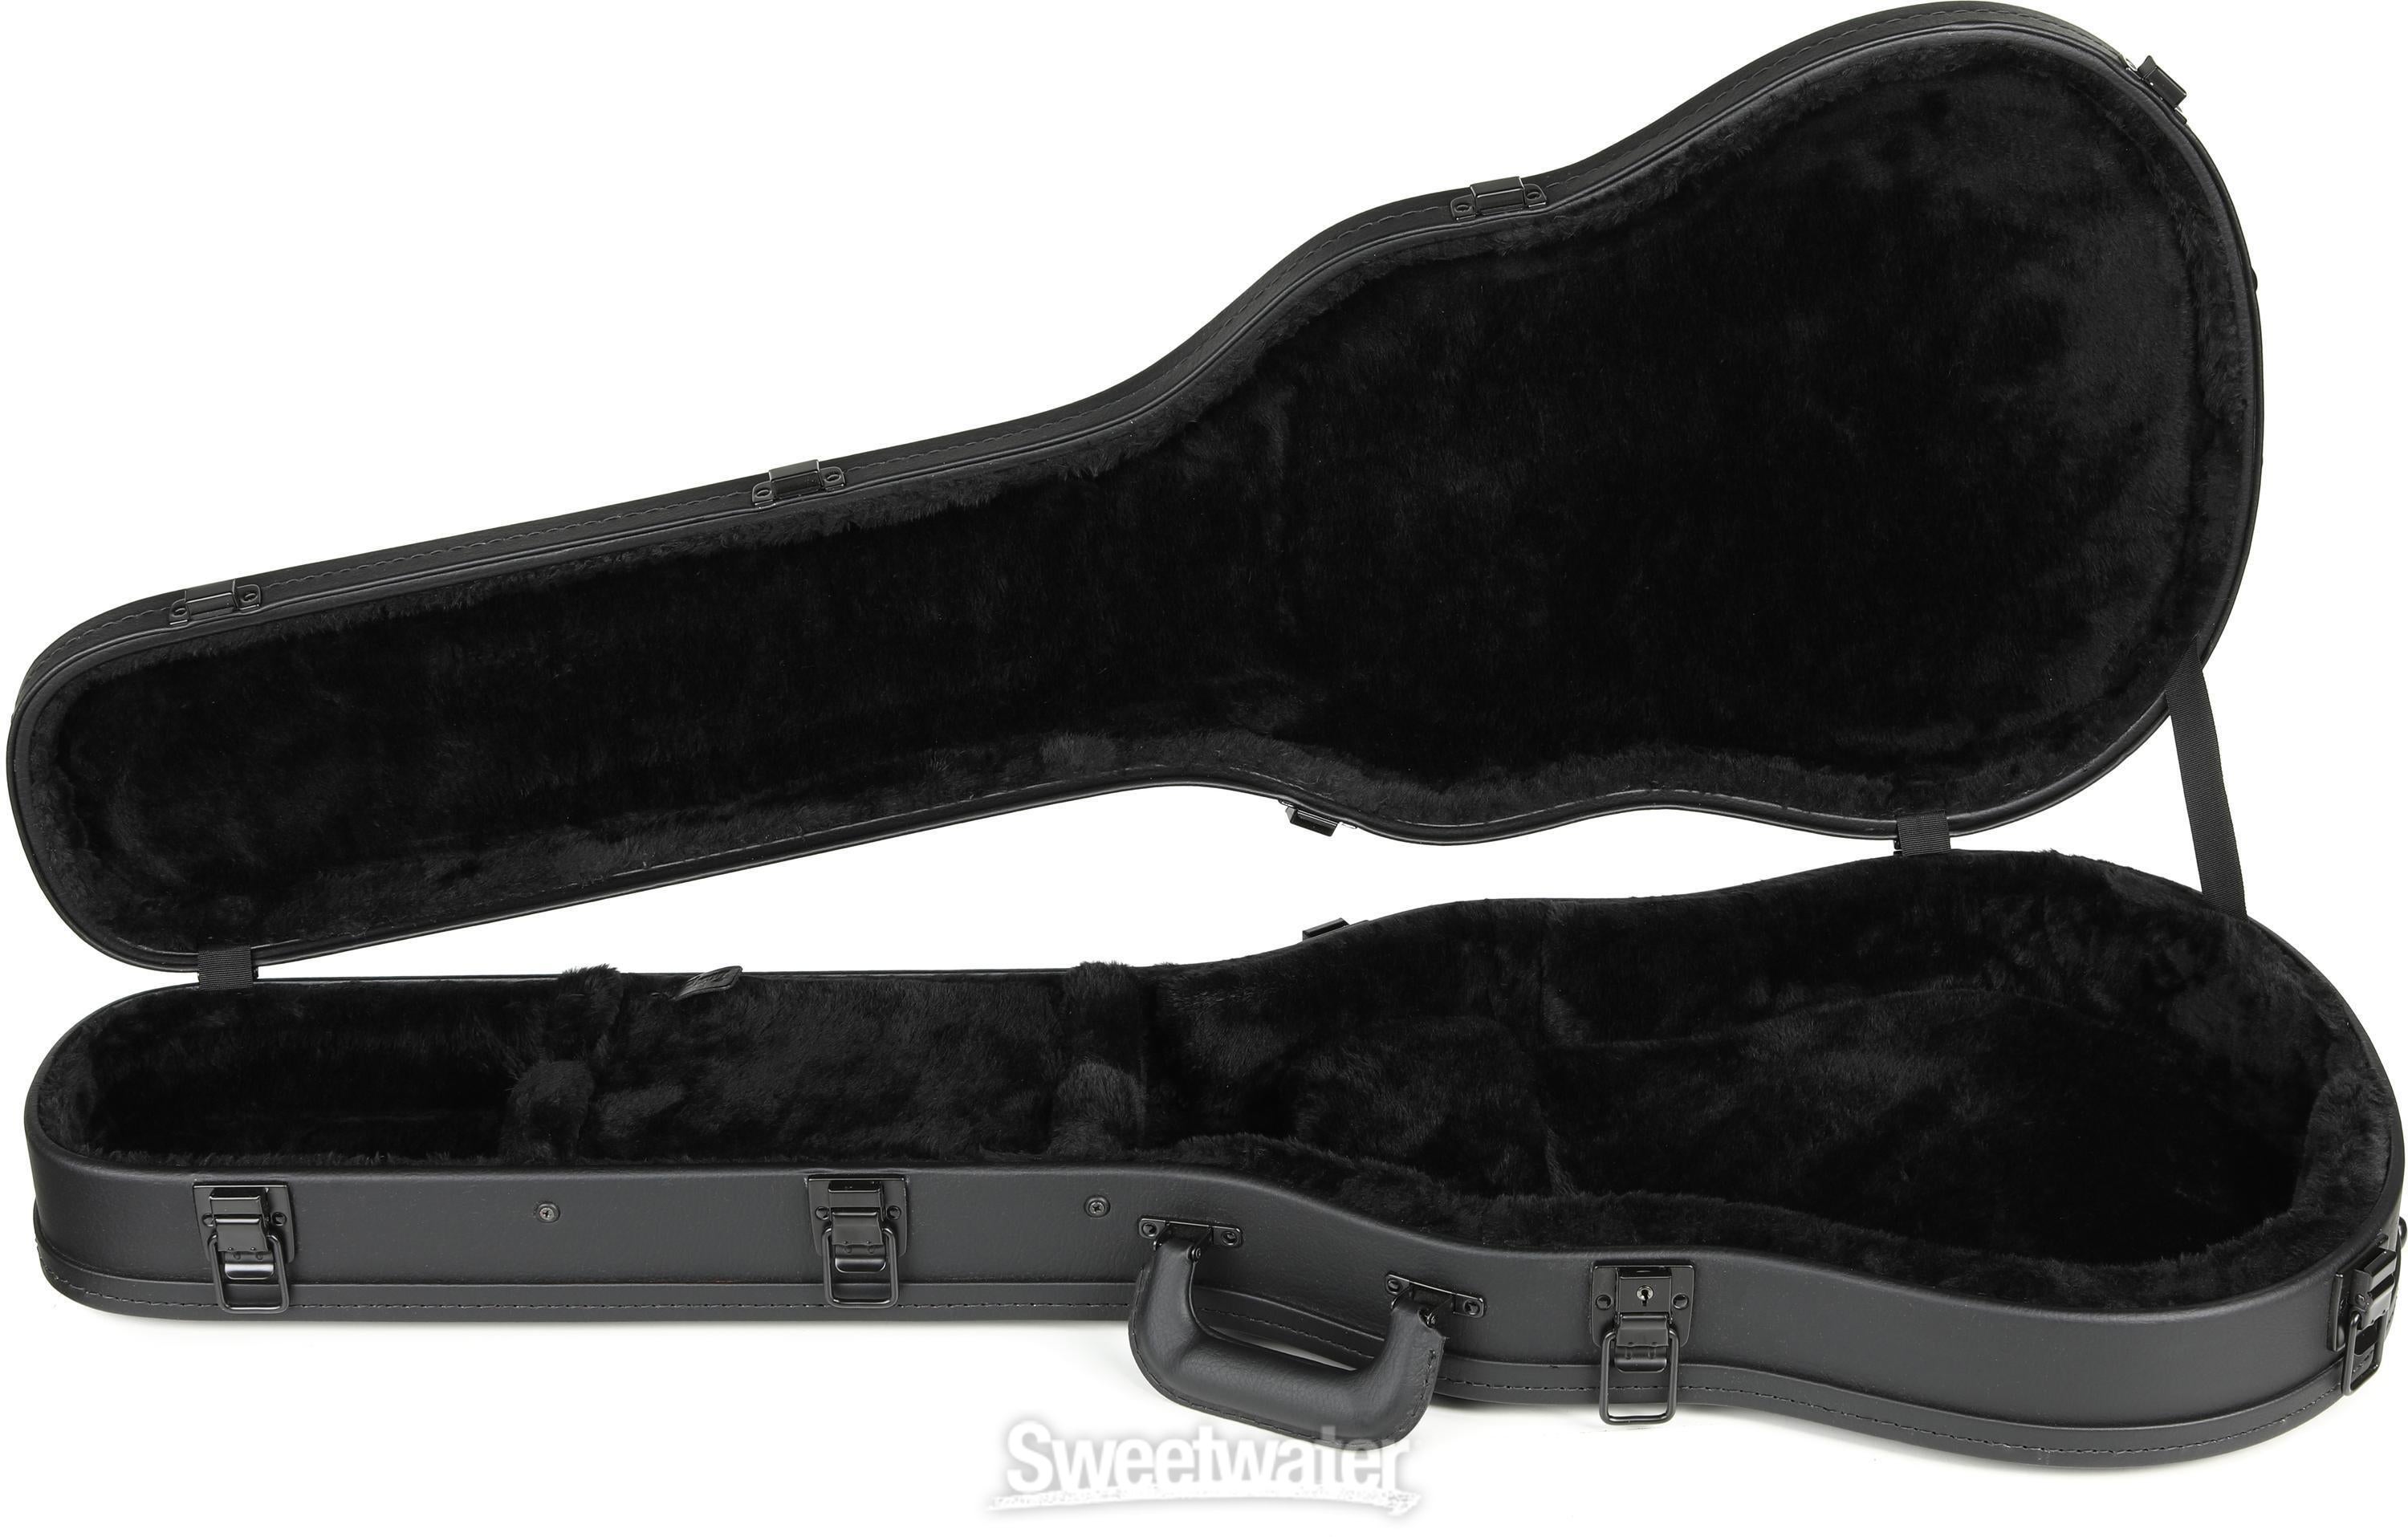 Gibson Accessories ES-339 Modern Hardshell Case - Black | Sweetwater